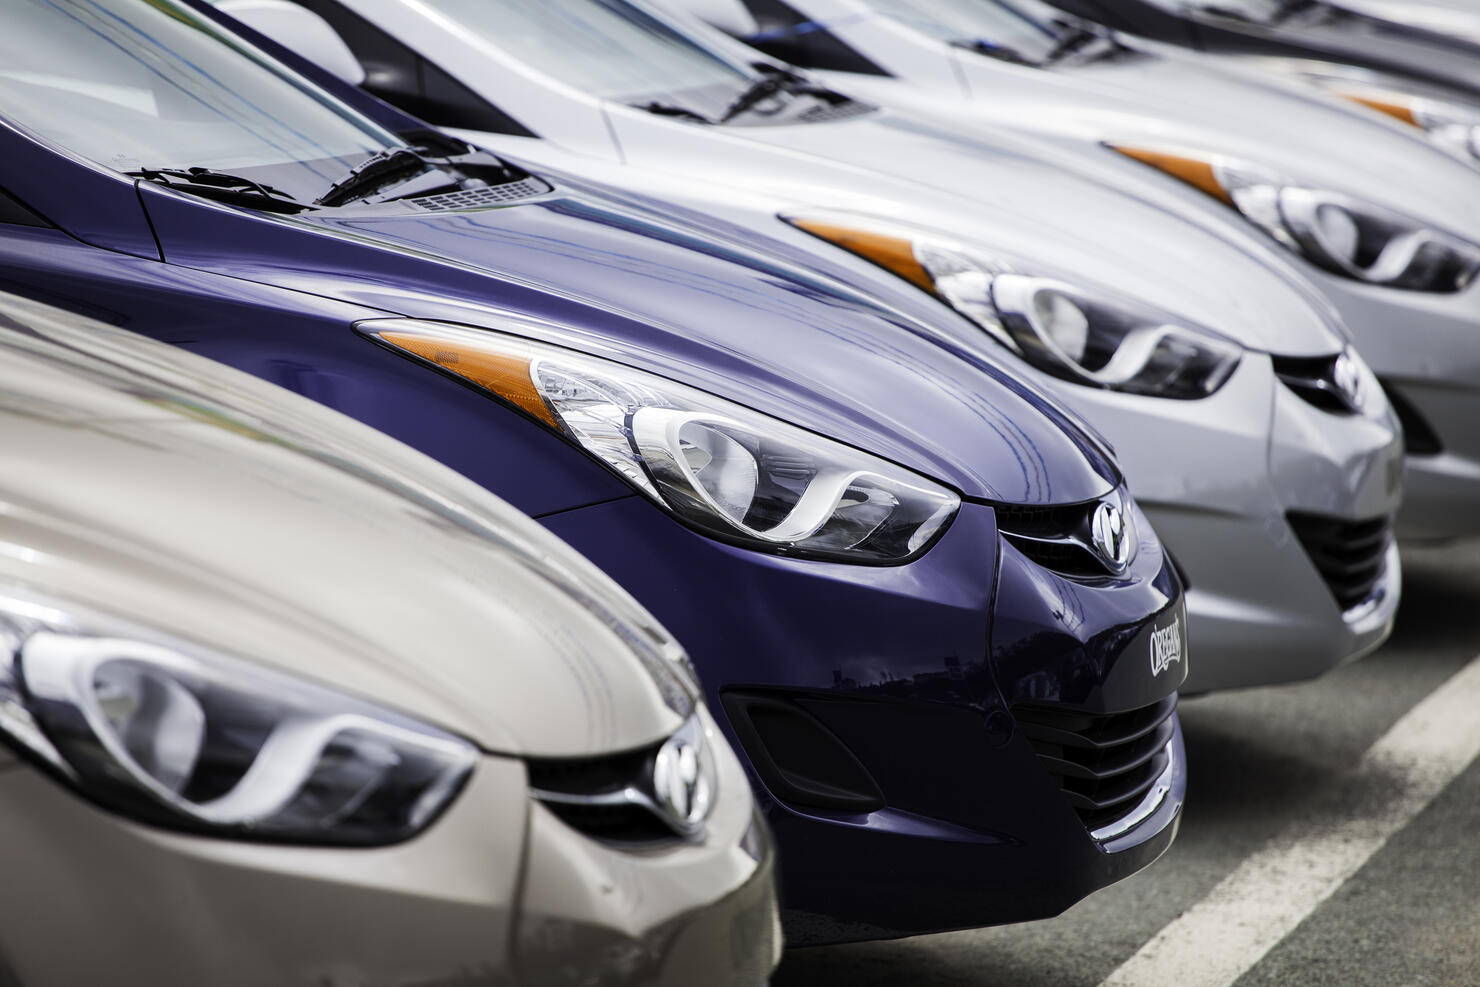 New 2013 Hyundai Elantra Vehicles in a Row